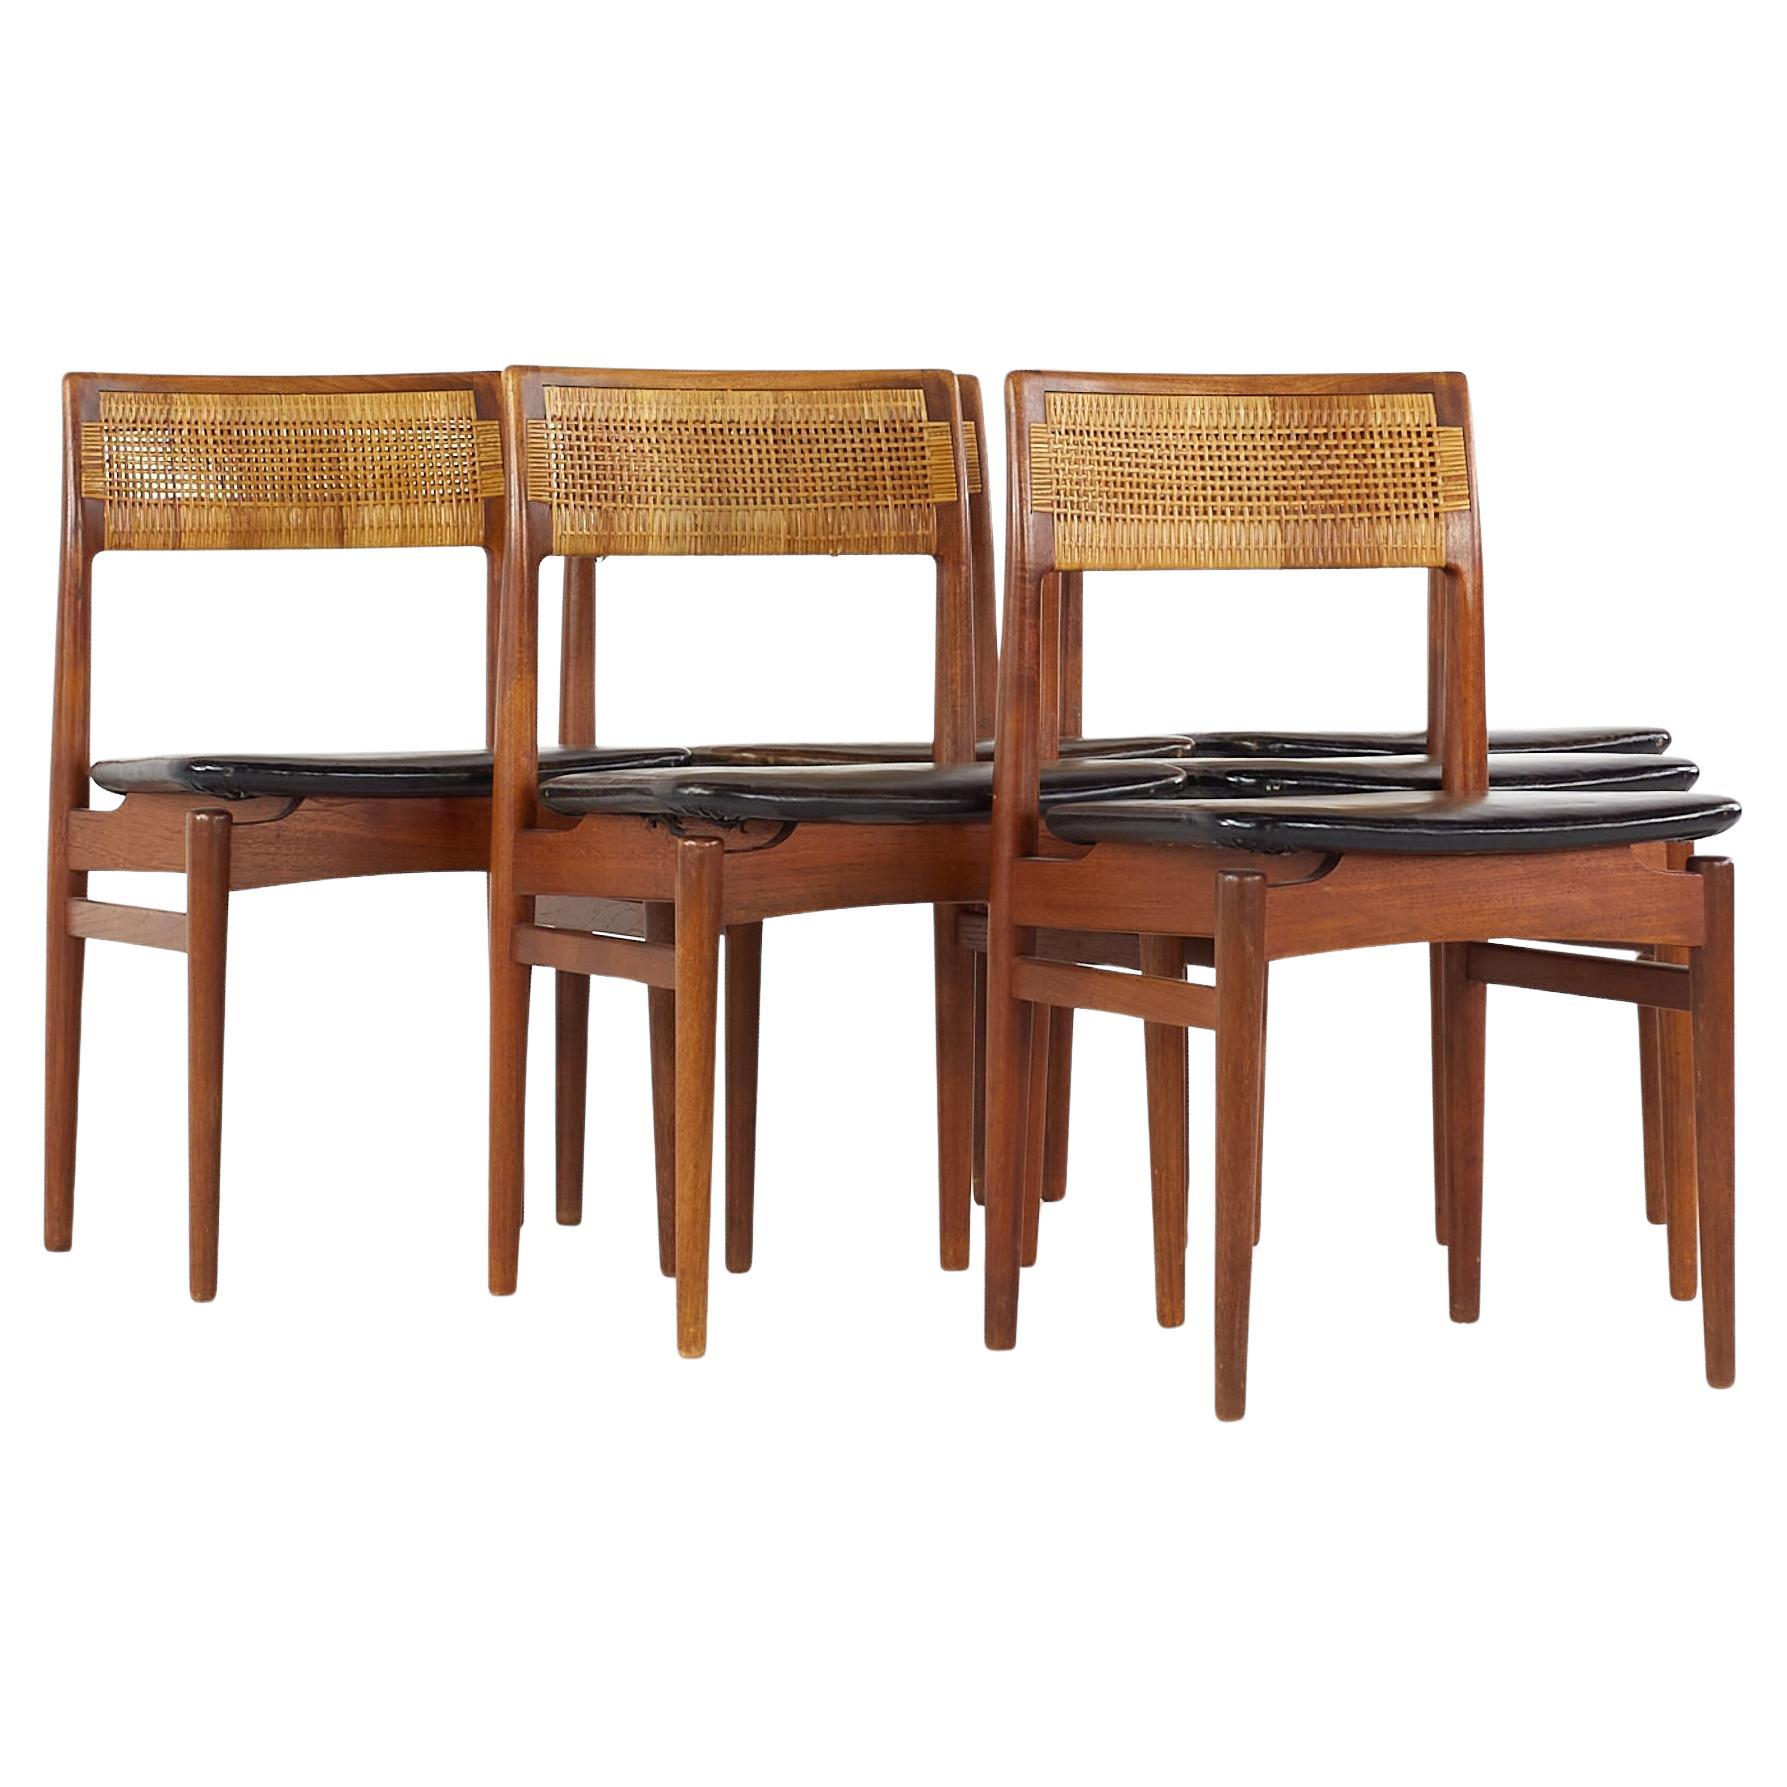 Erik Wørts Mid Century Danish Teak and Cane Dining Chairs - Set of 6 For Sale